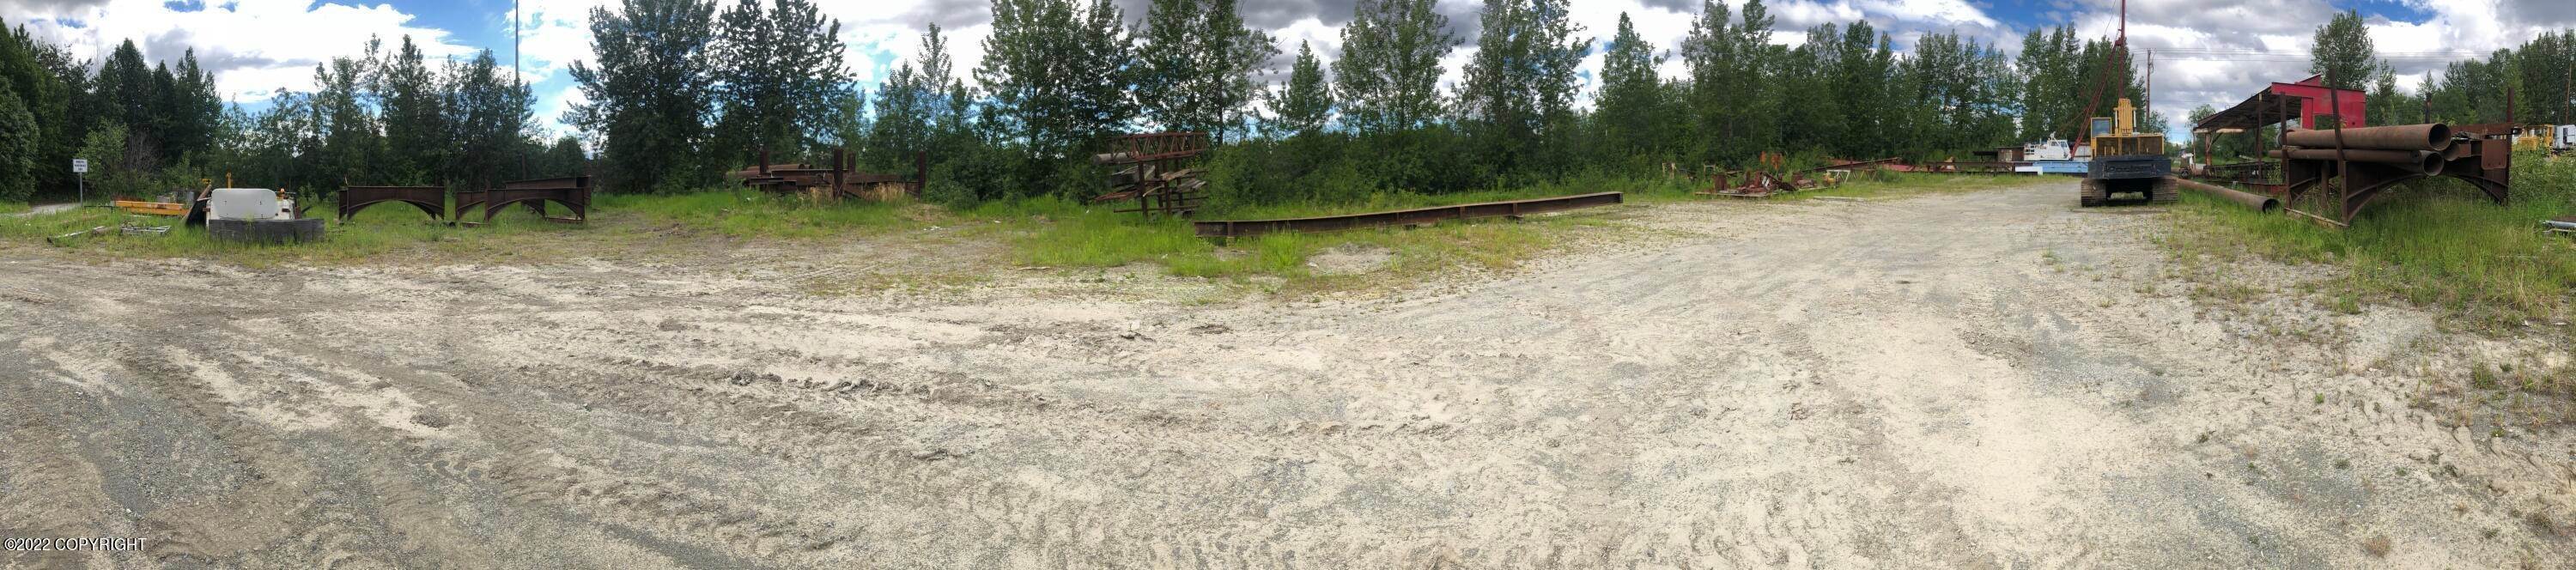 9. Land for Sale at Anchorage, Alaska United States